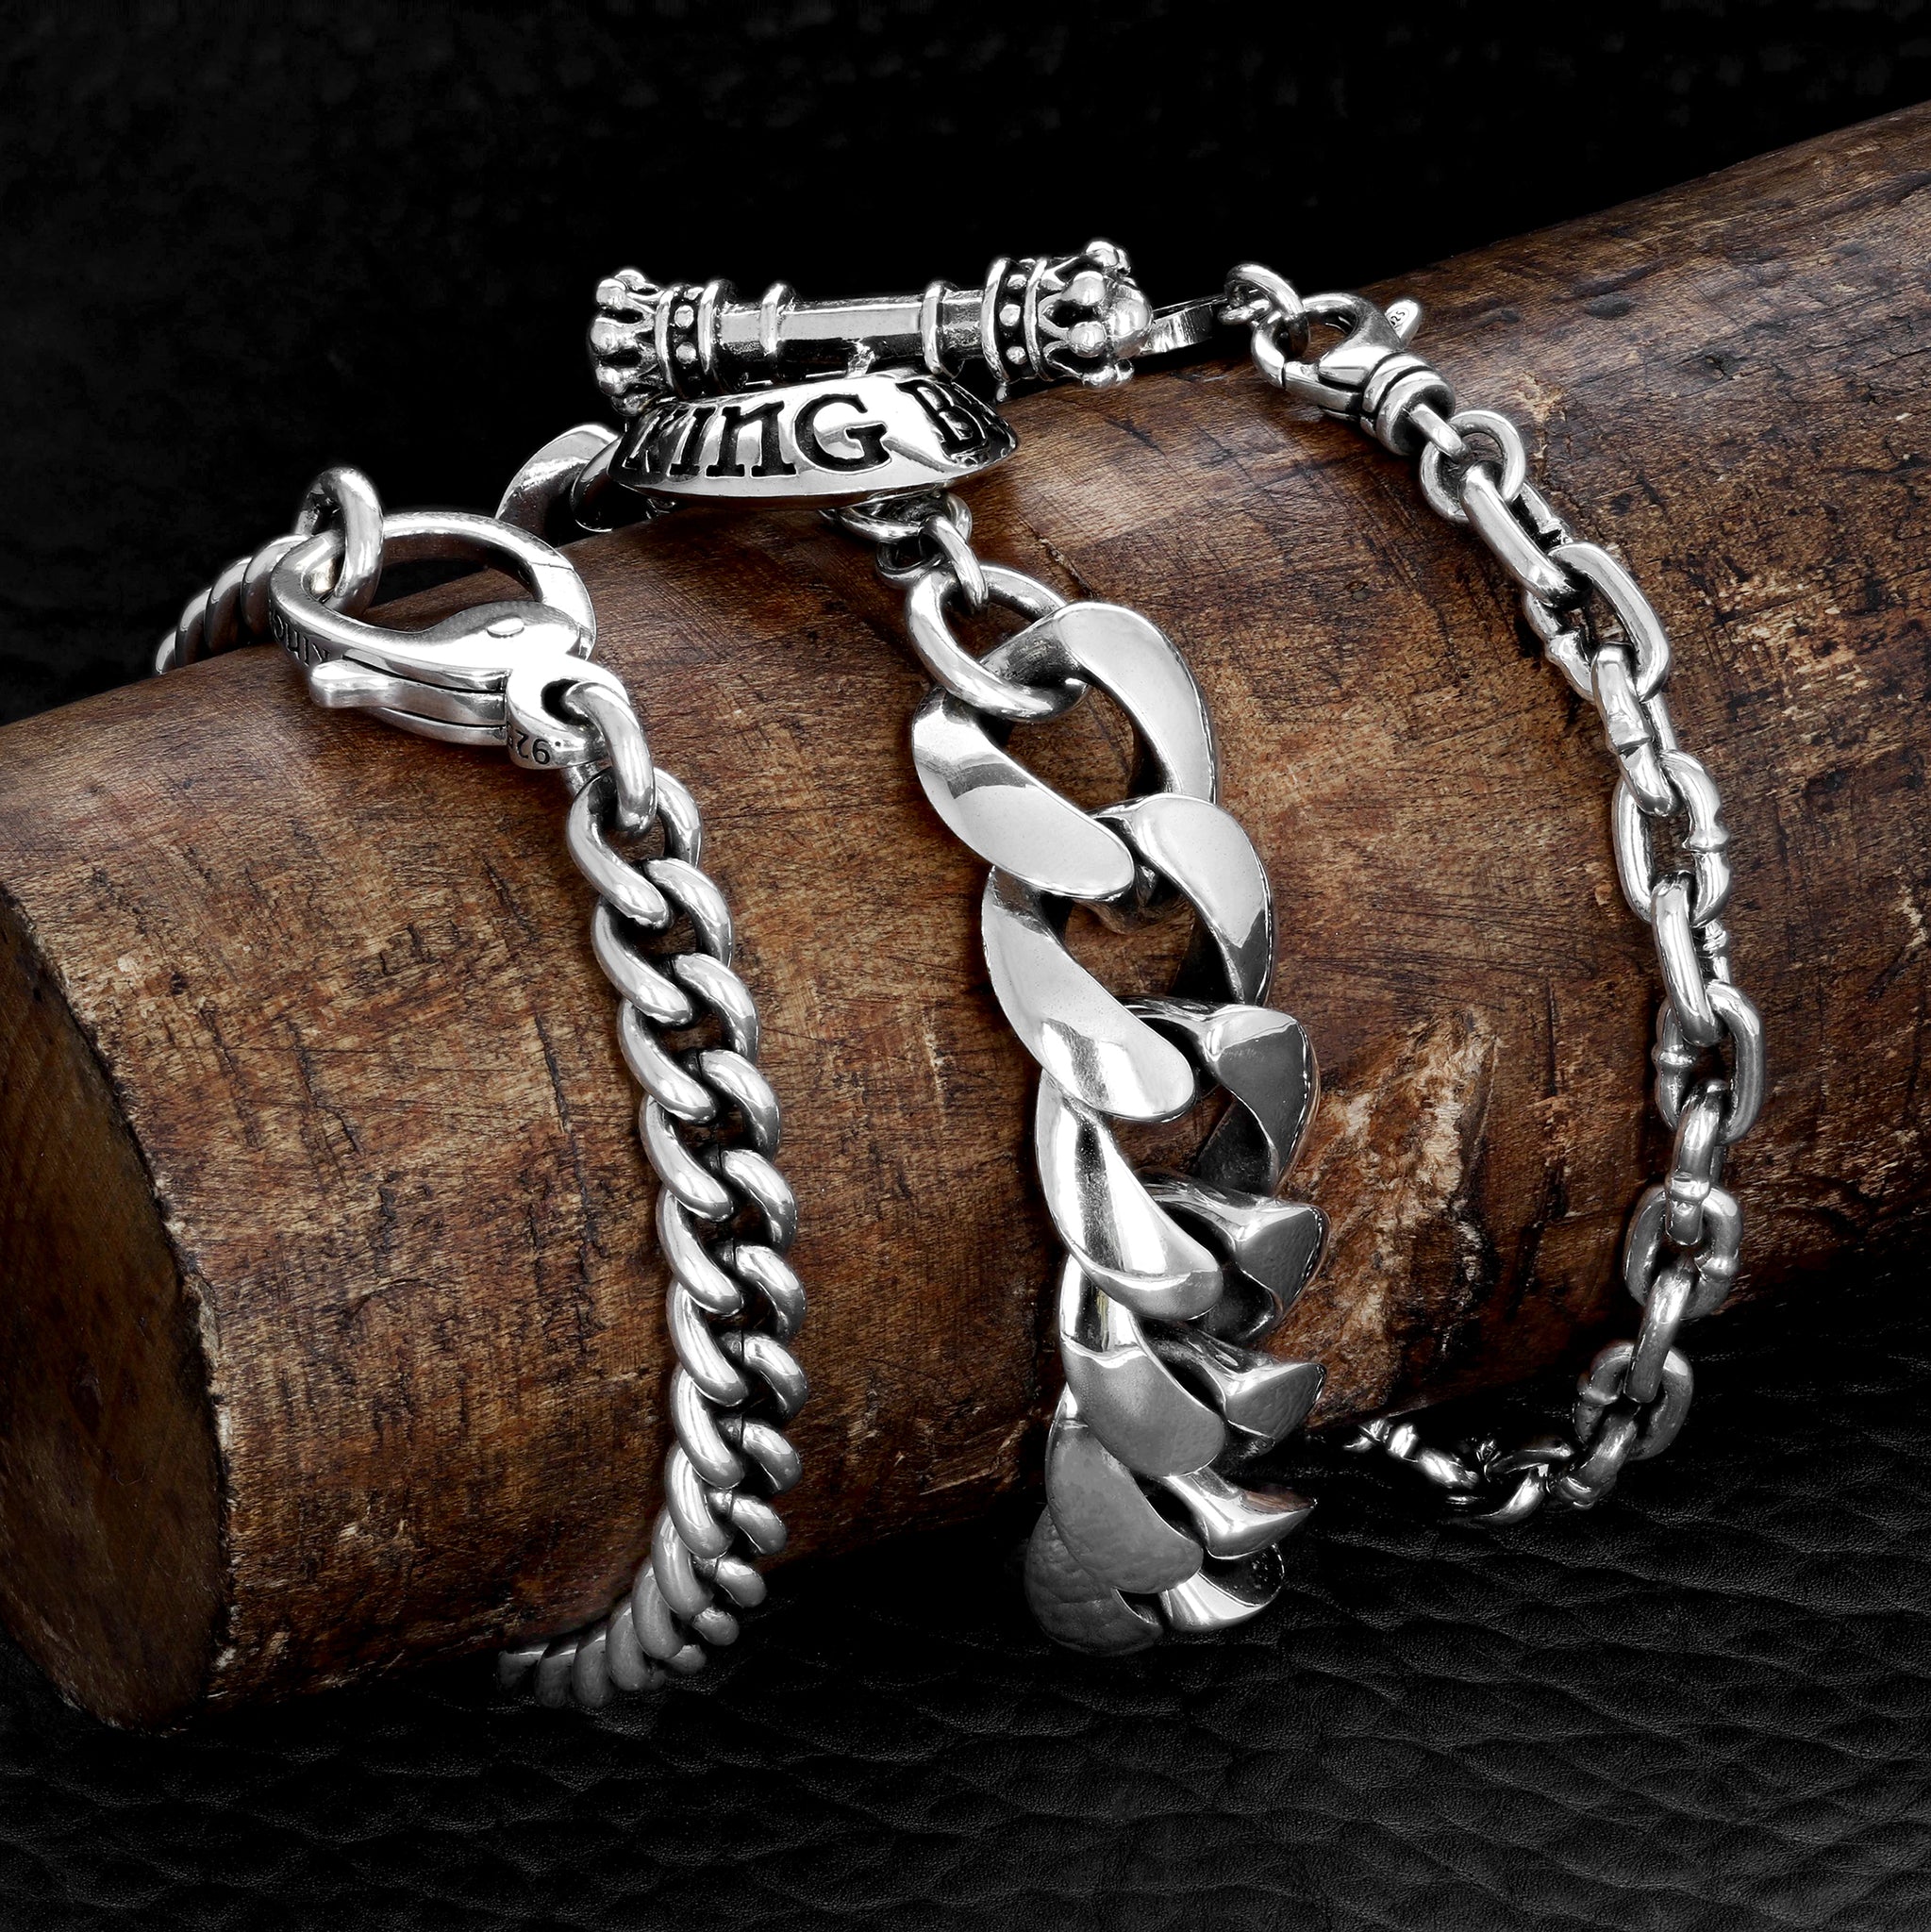 Product shot of three bracelets on a wood mandril